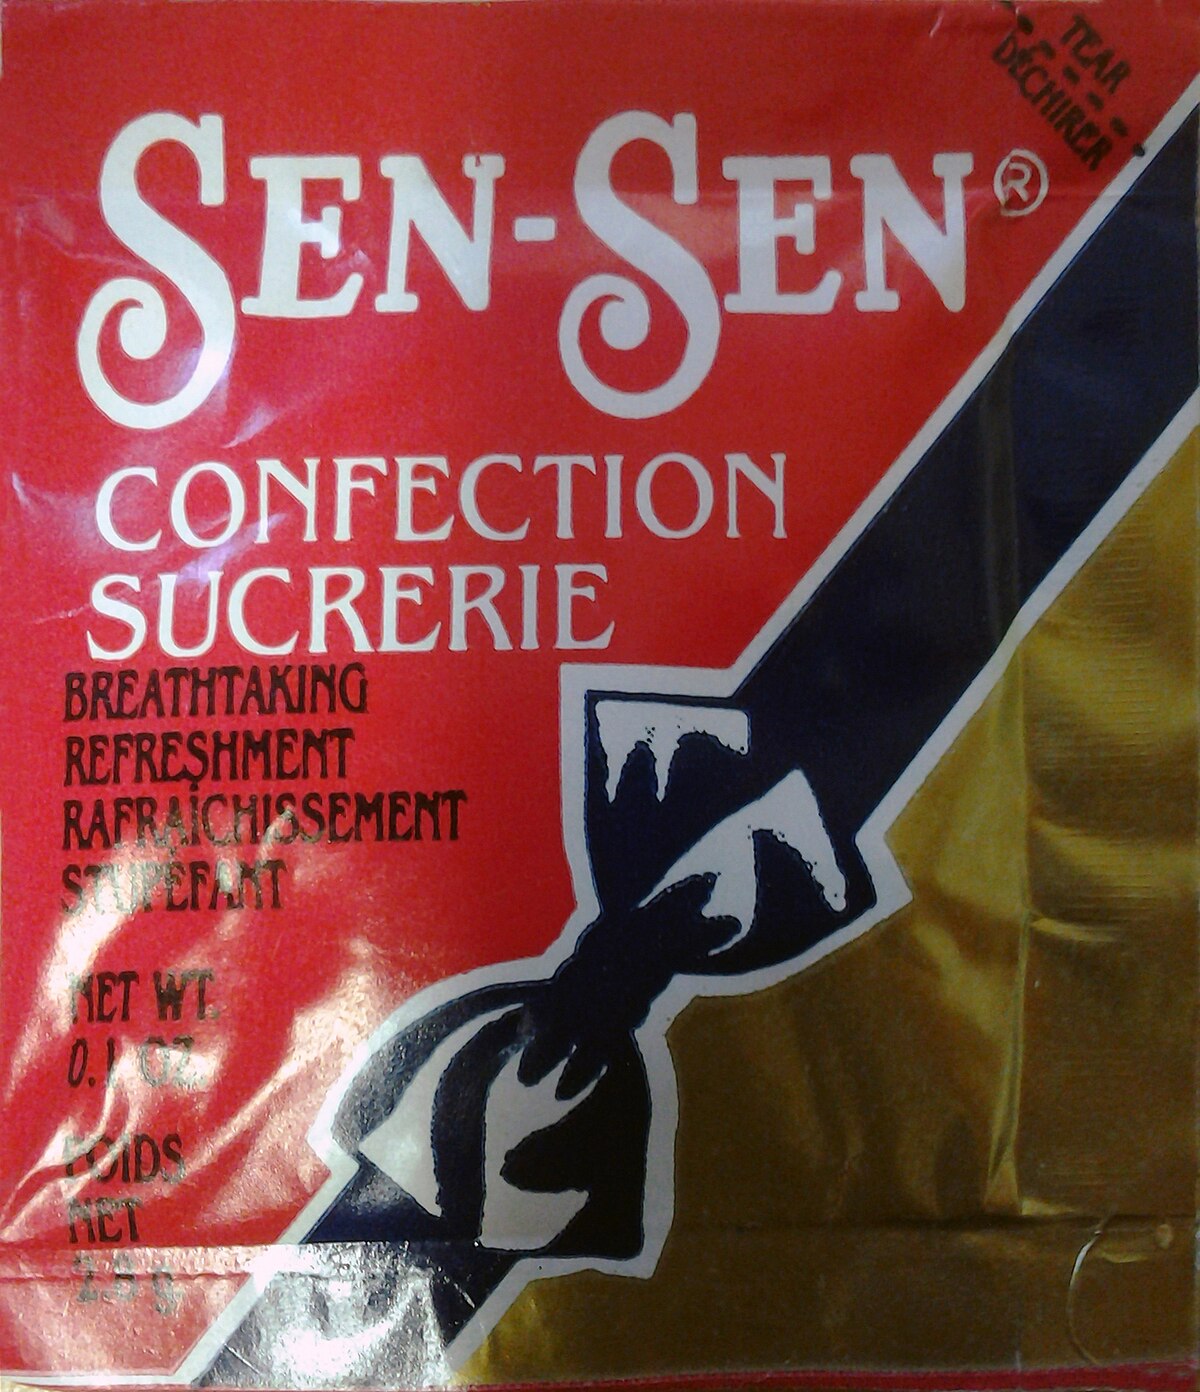 Sen-Sen was a type of breath freshener originally marketed as a 